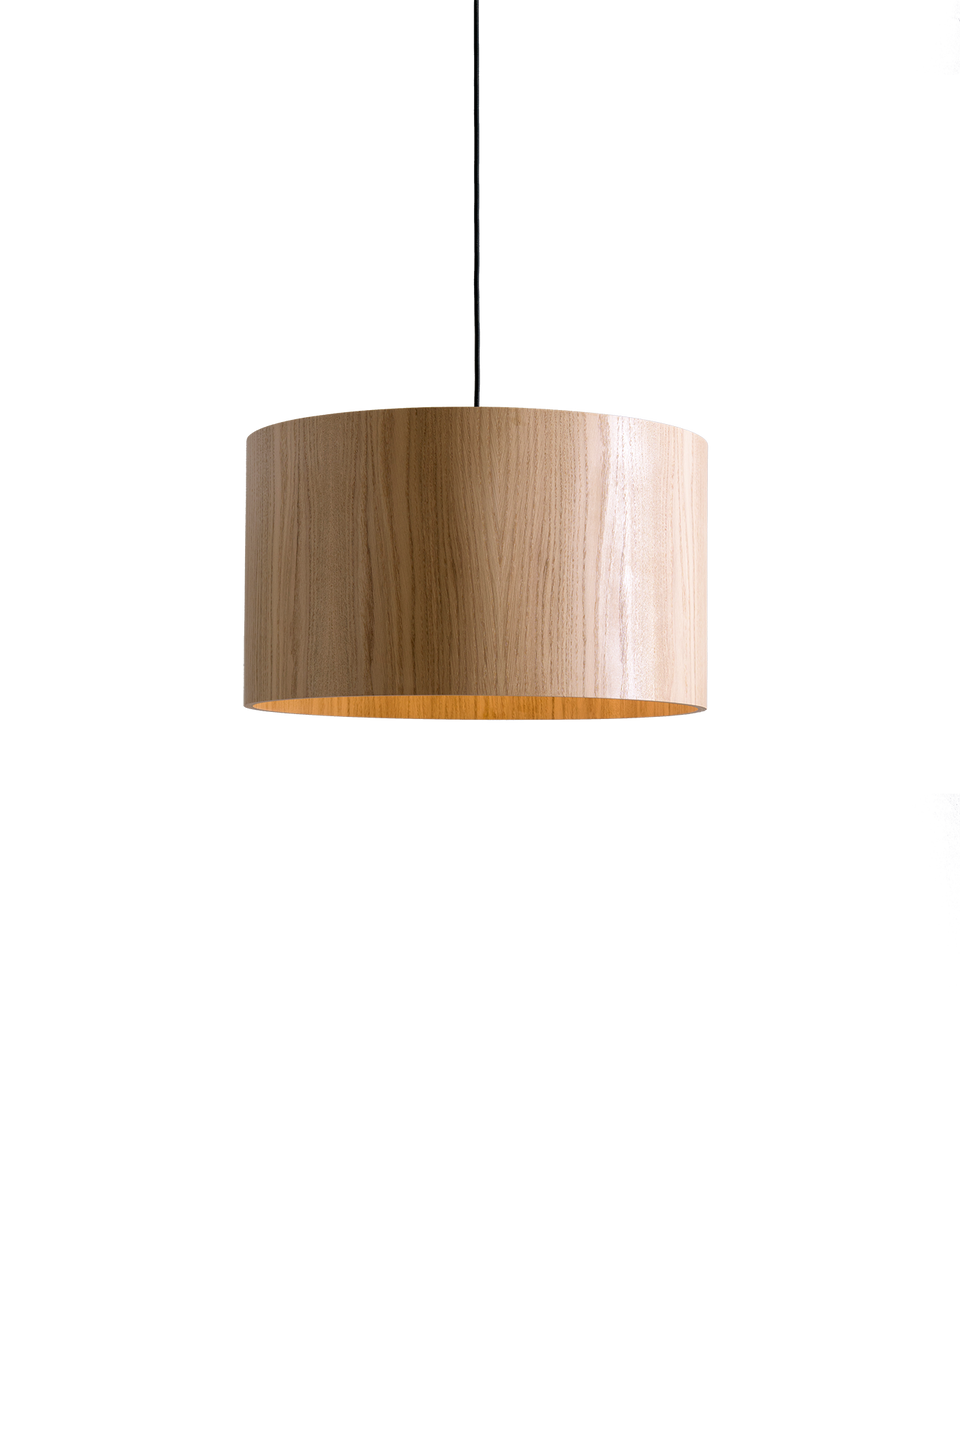 wooden pendant lighting, ahil 50, מנורה תלויה